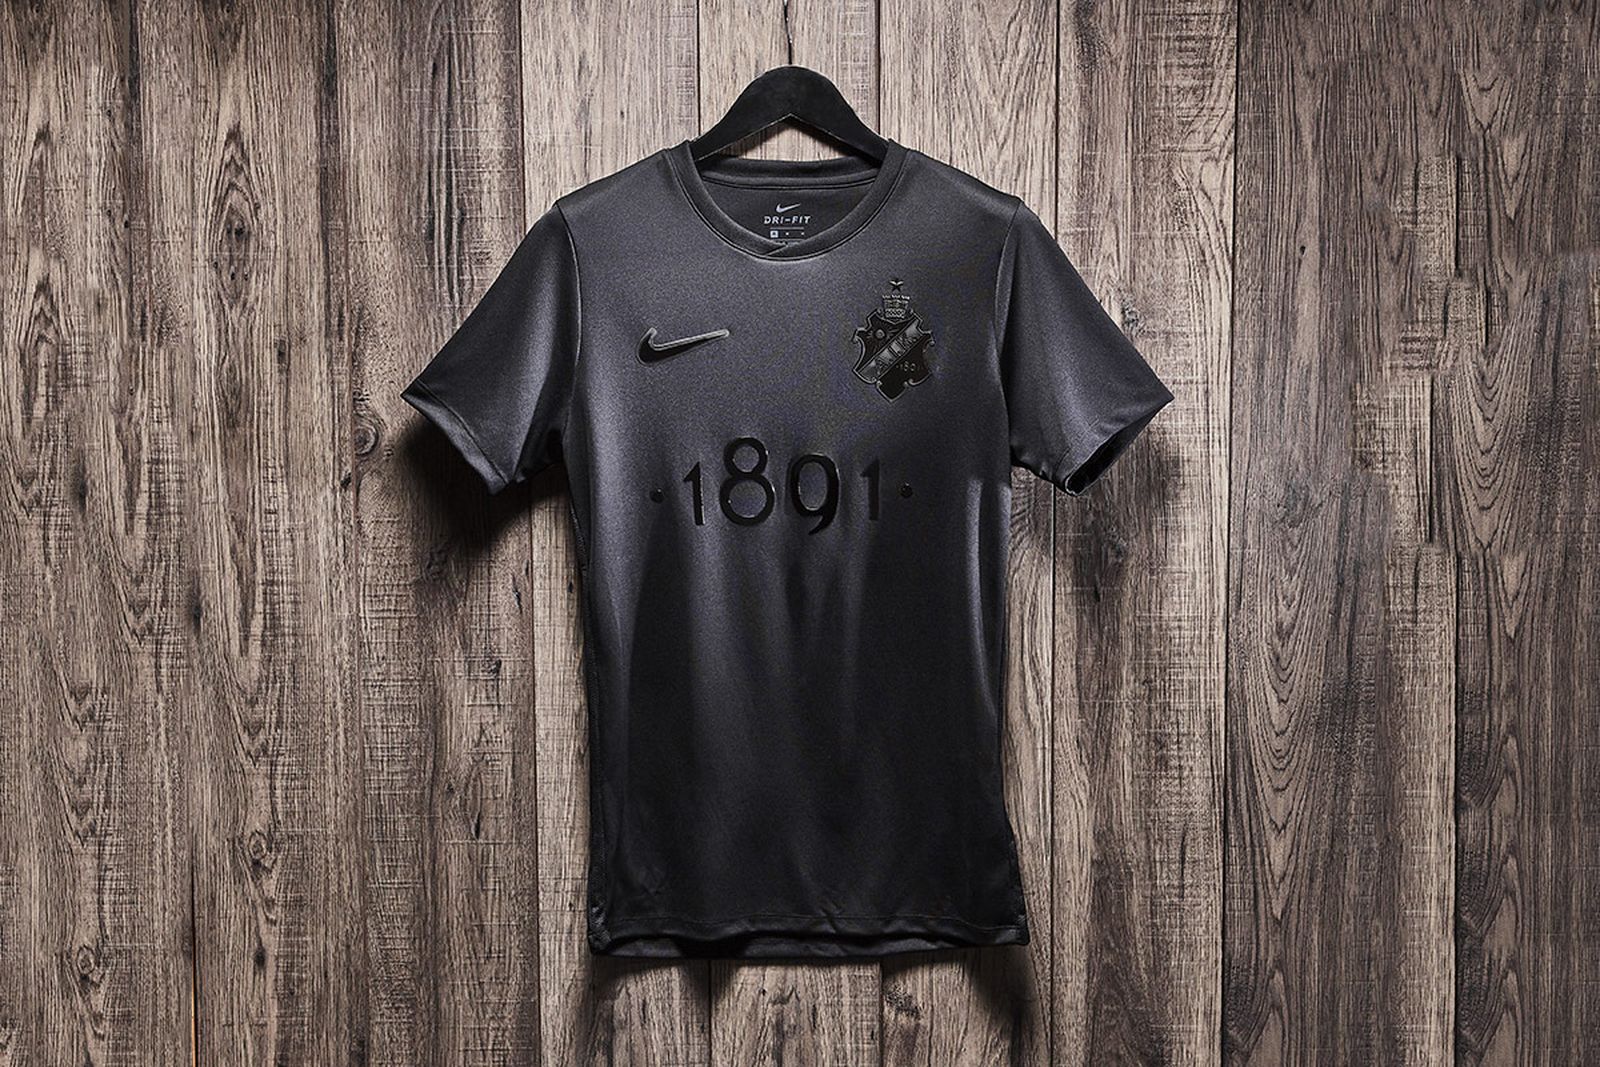 nike aik soccer jersey buy here AIK Fotboll